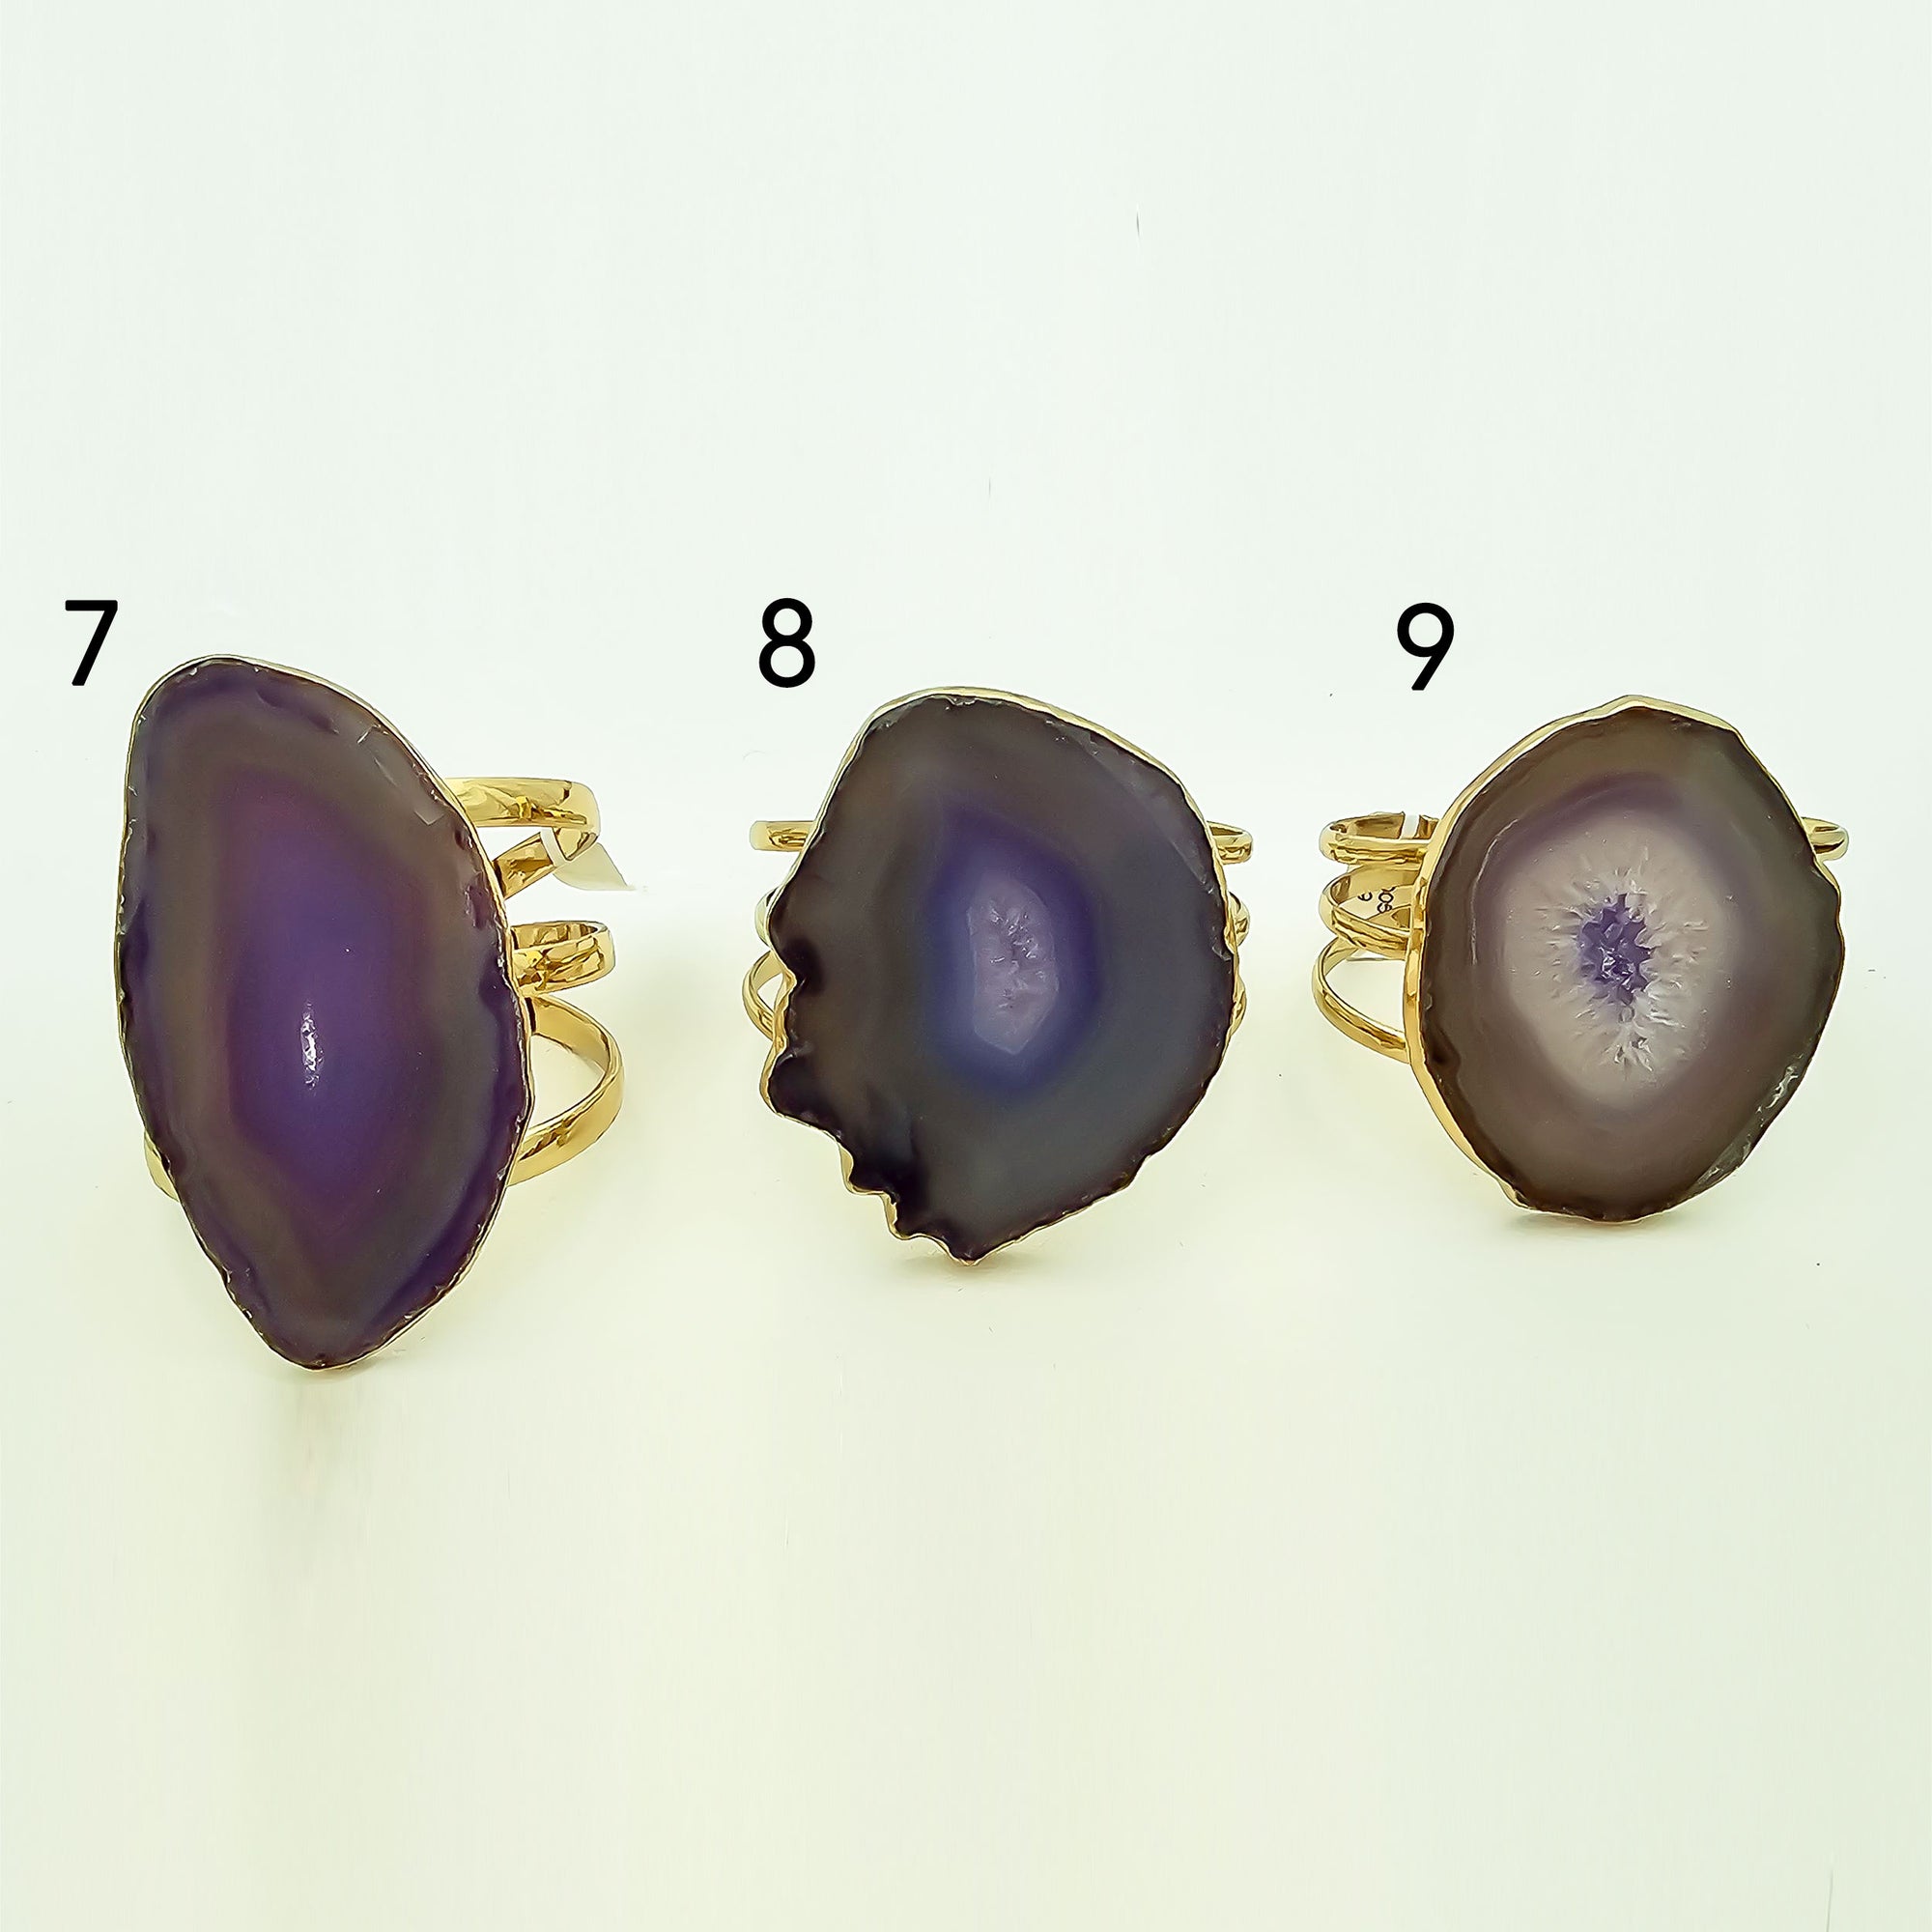 Alchemia Purple Agate Slice Multi-Band Cuff | Charles Albert Jewelry